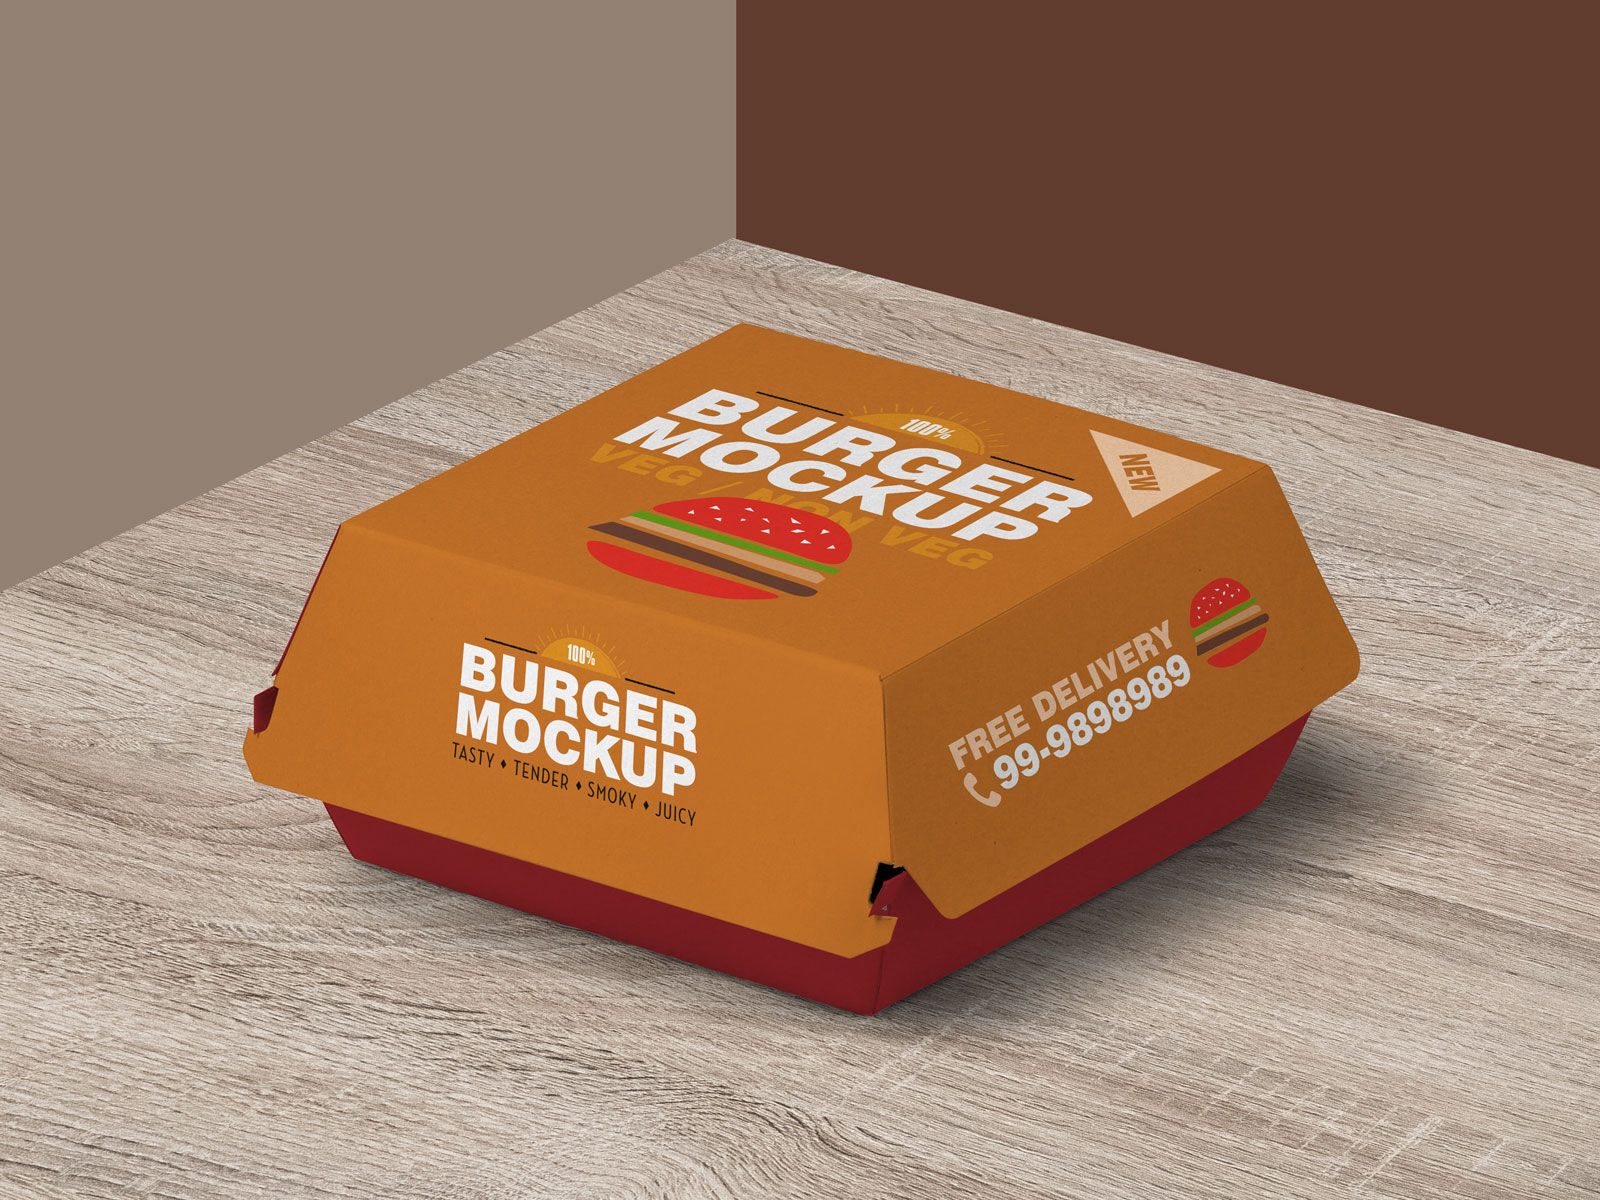 Top View Burger Box Mockup on Wooden Surface FREE PSD